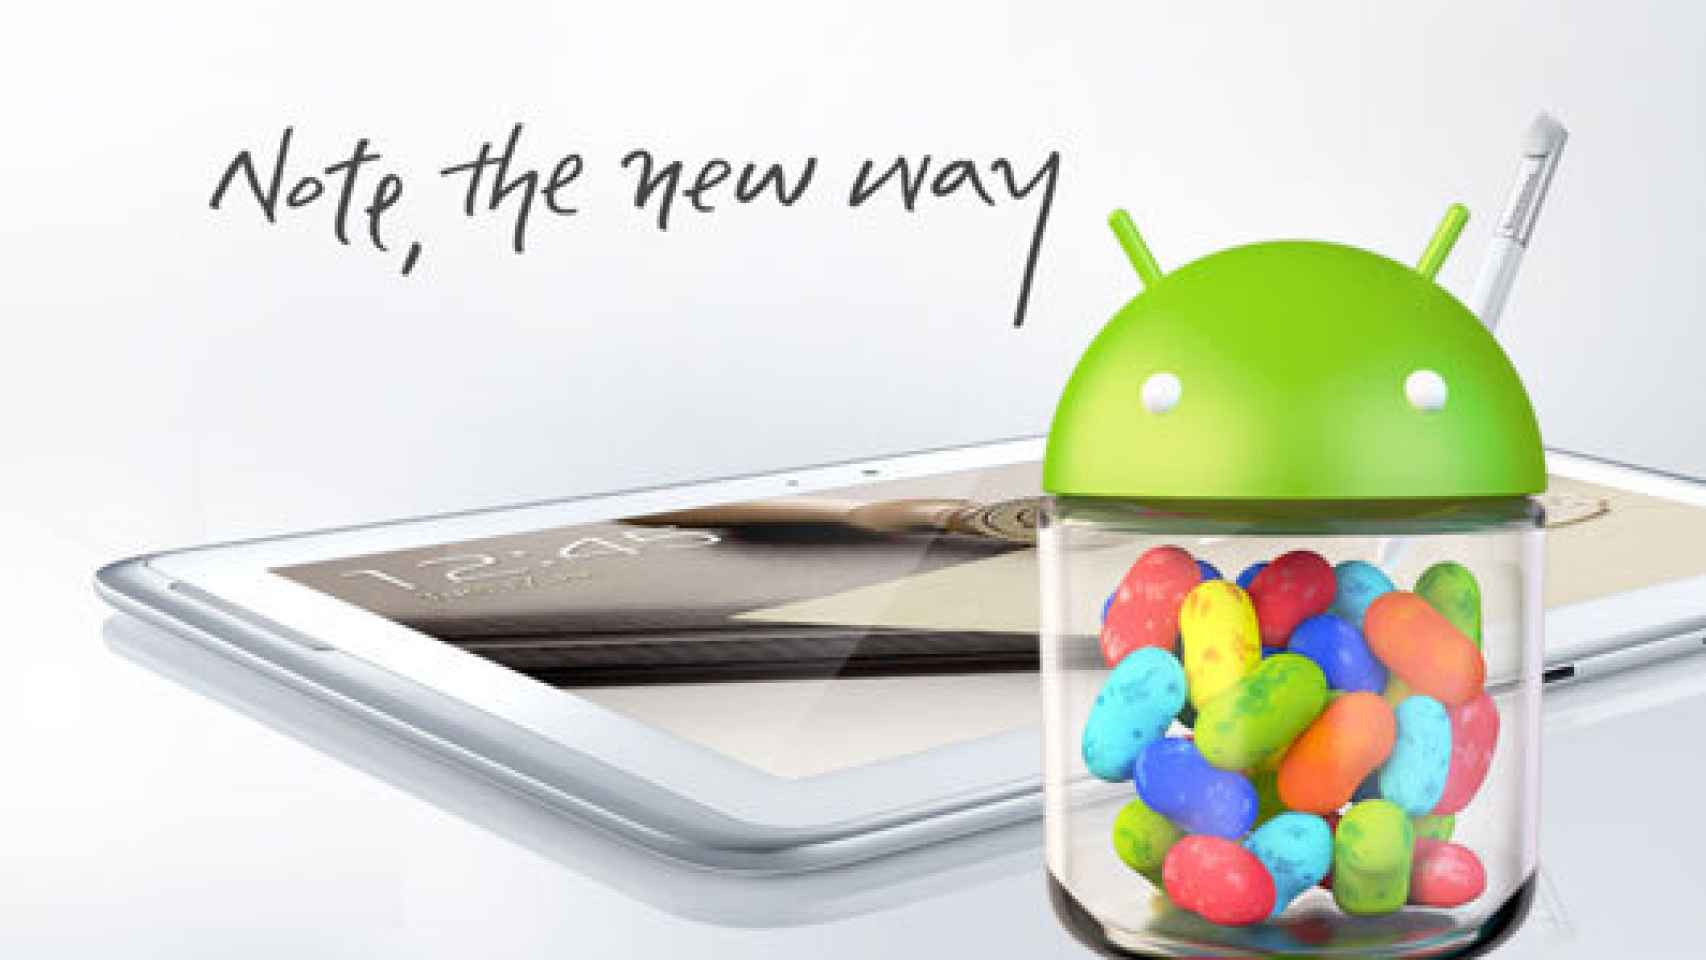 Galaxy Note 10.1 empieza a recibir Jelly Bean